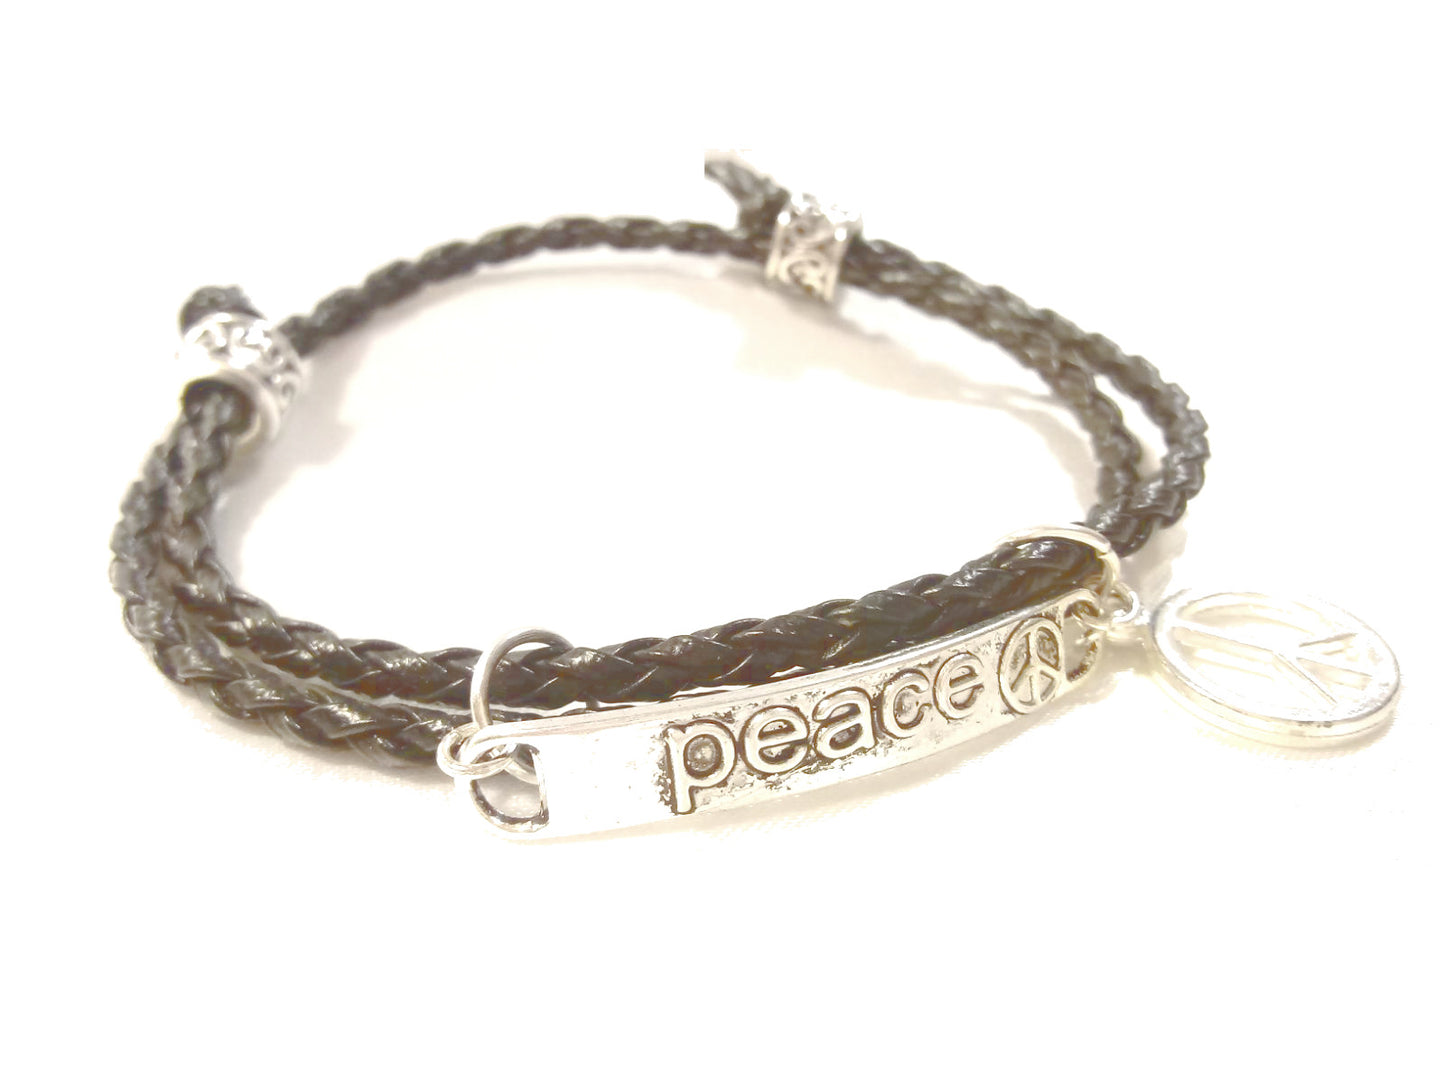 Peace Sign Black Leather Wrap Bracelet